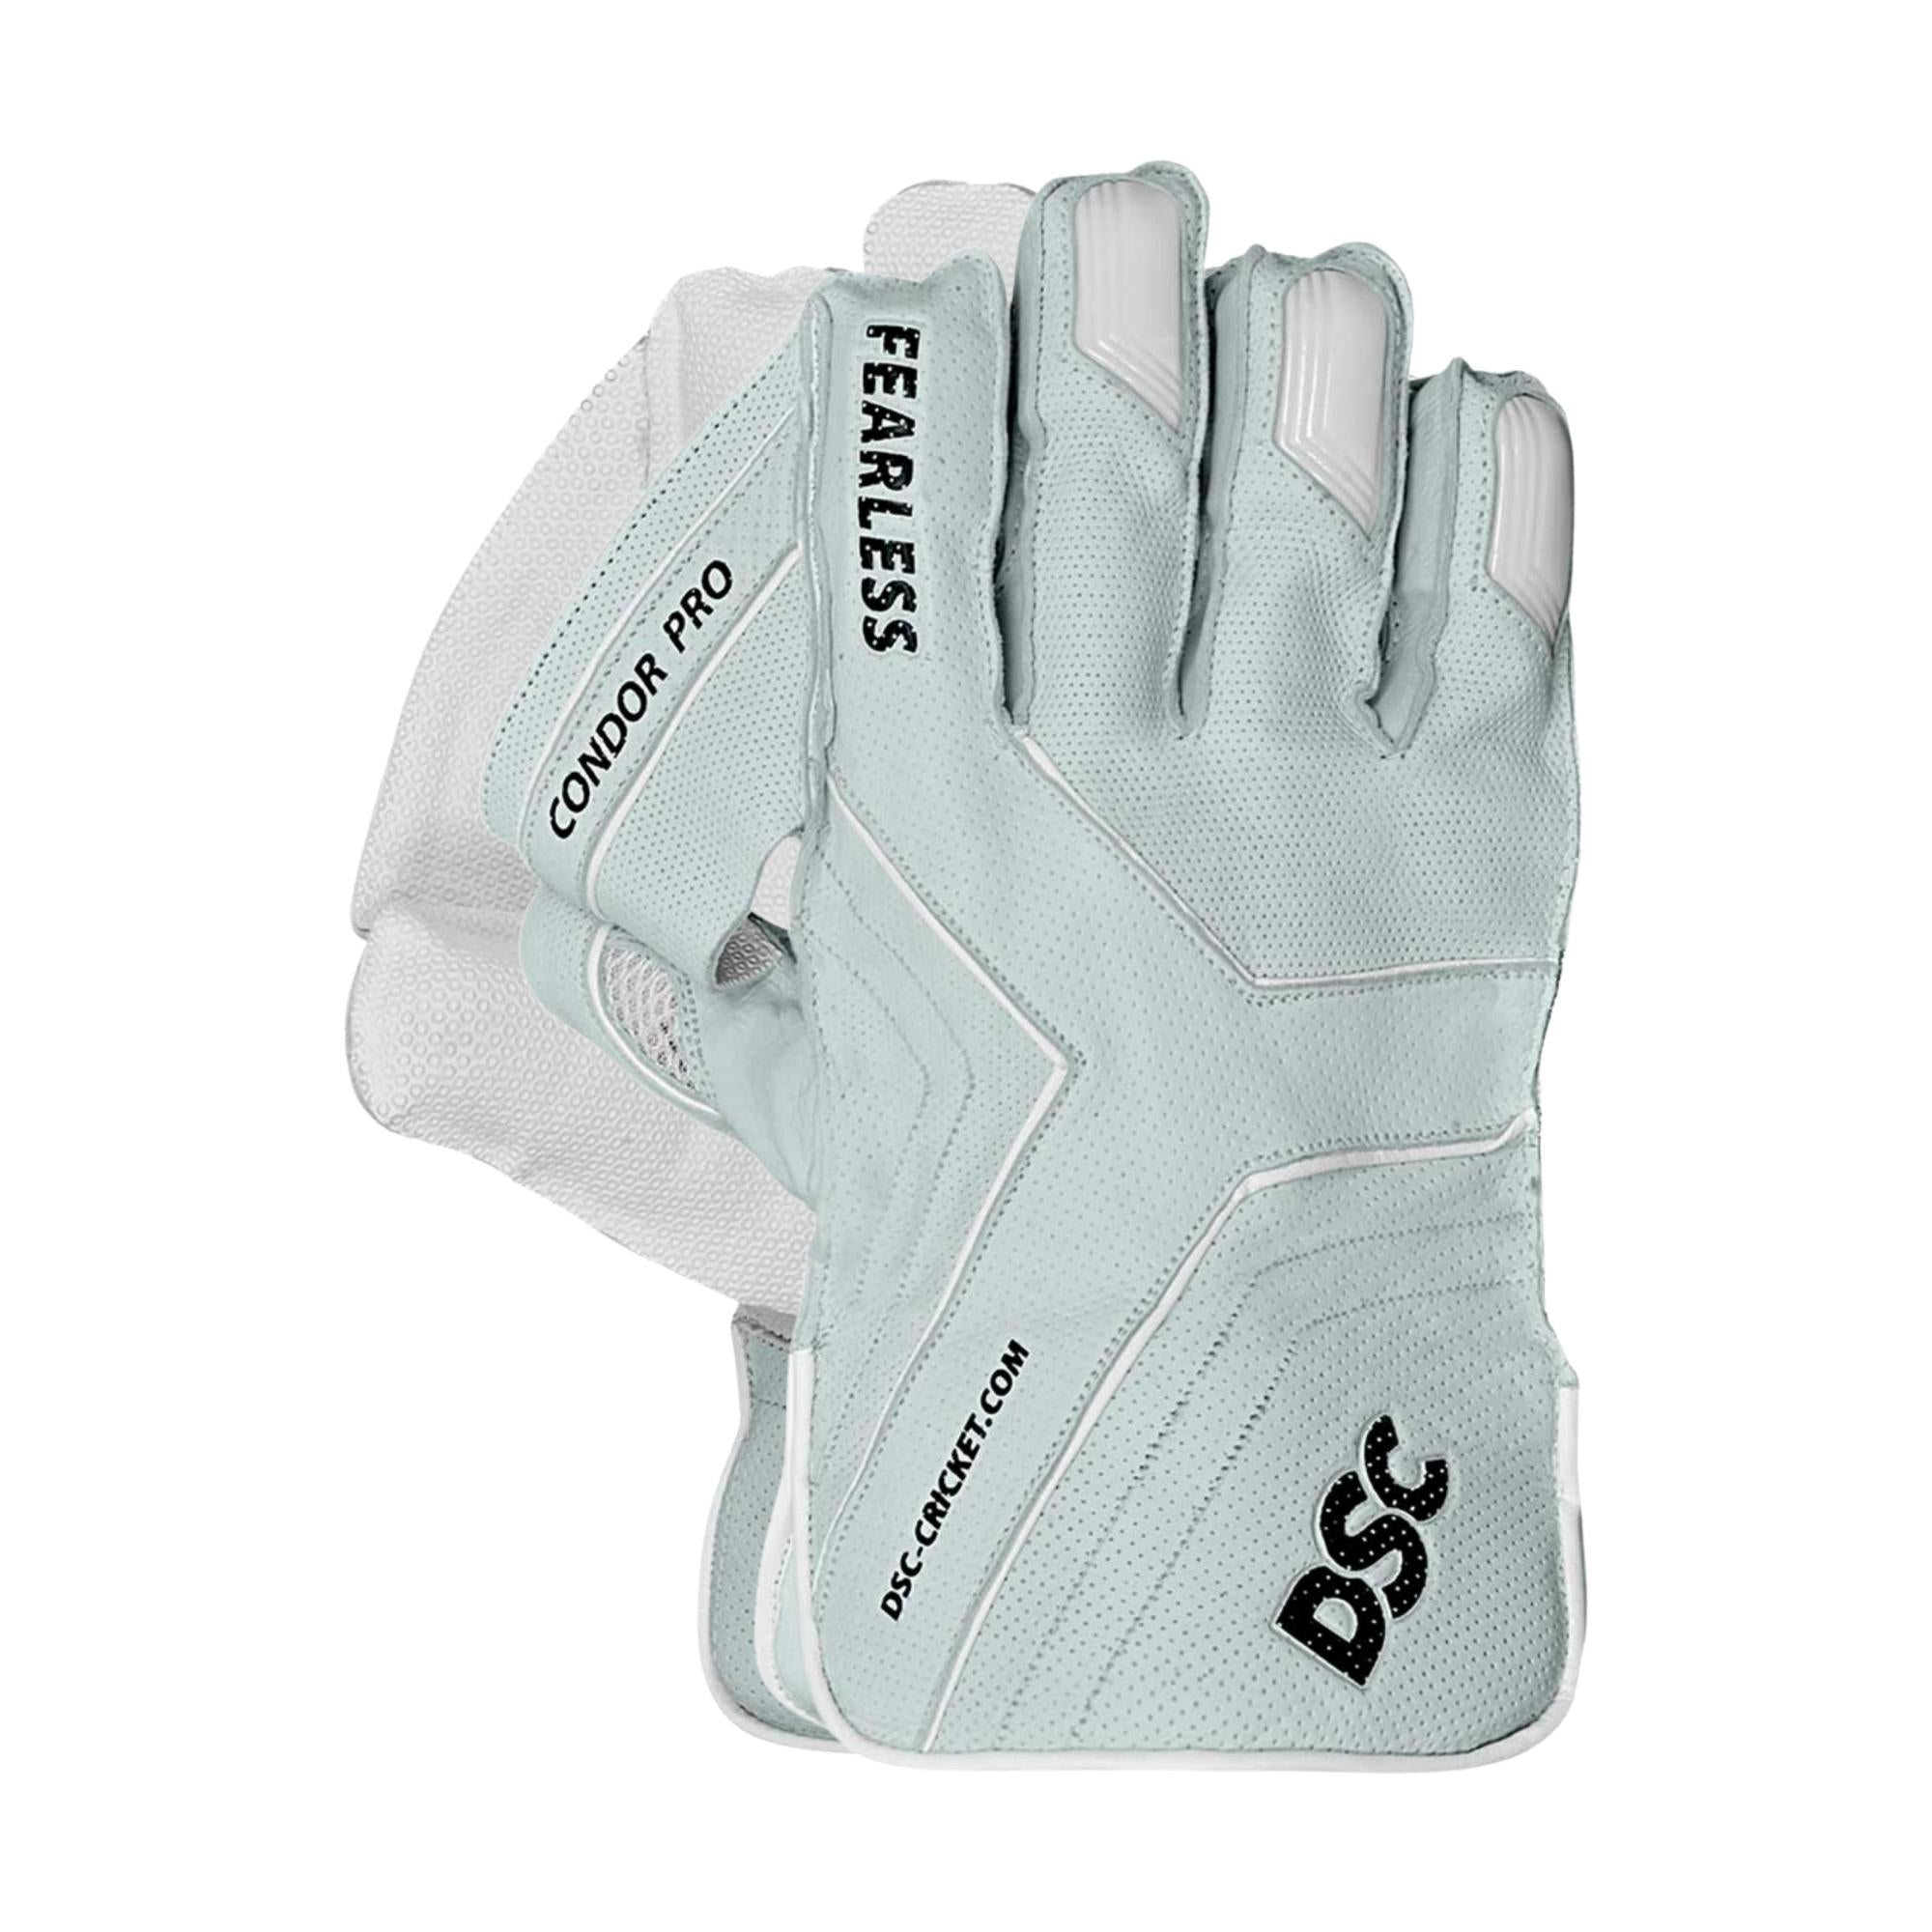 DSC Wicket Keeping Gloves Condor Pro